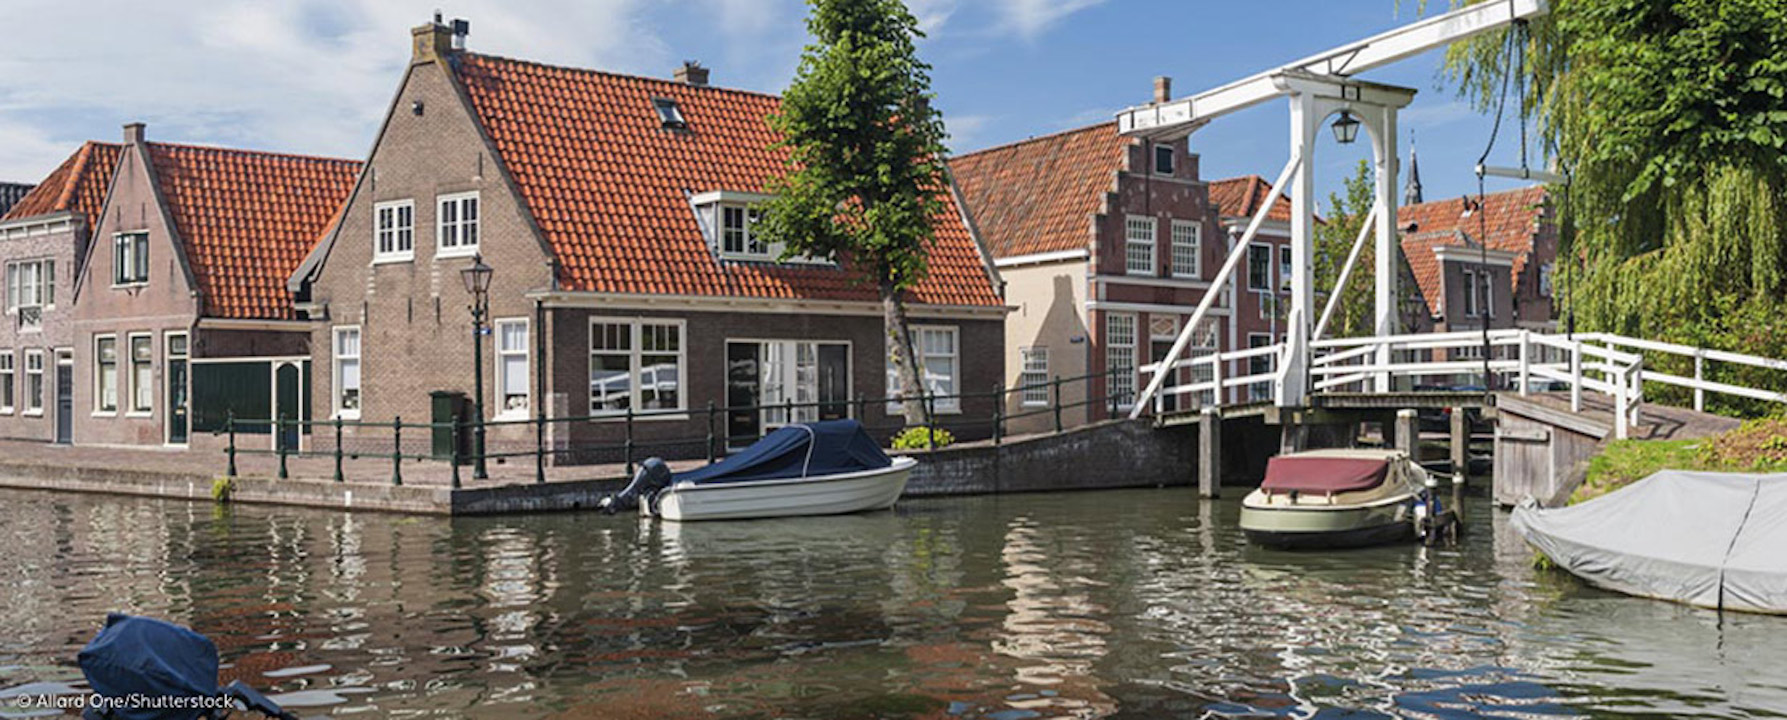 8 Day Sail & Bike IJsselmeer / Fully guided tour  